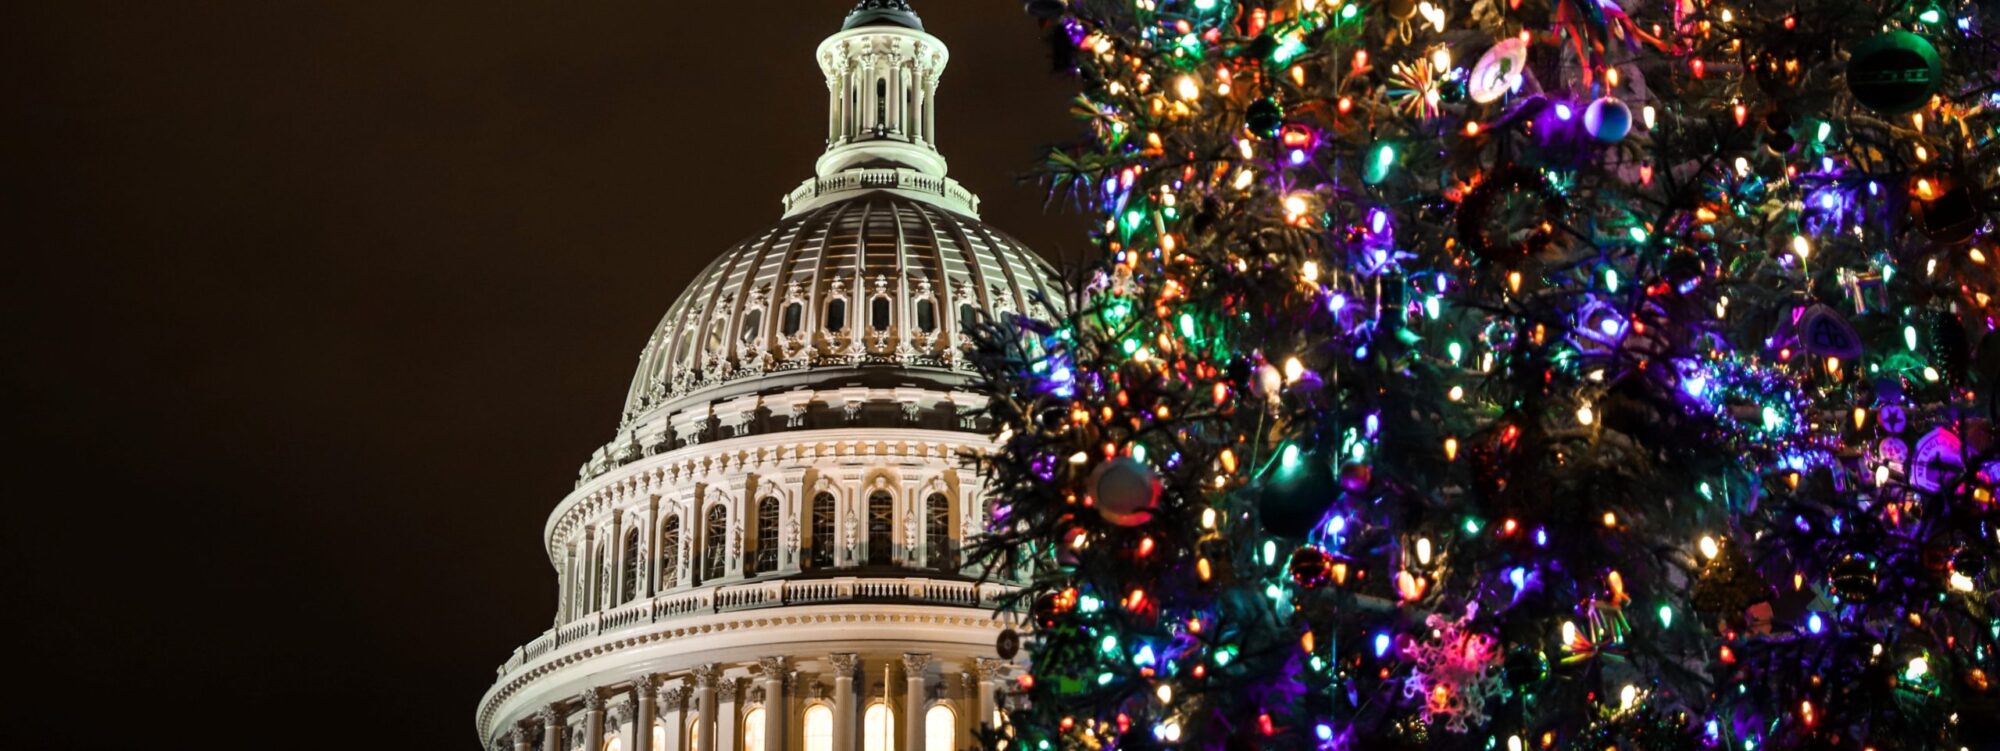 The People's Tree - Nation's Capital Washington DC